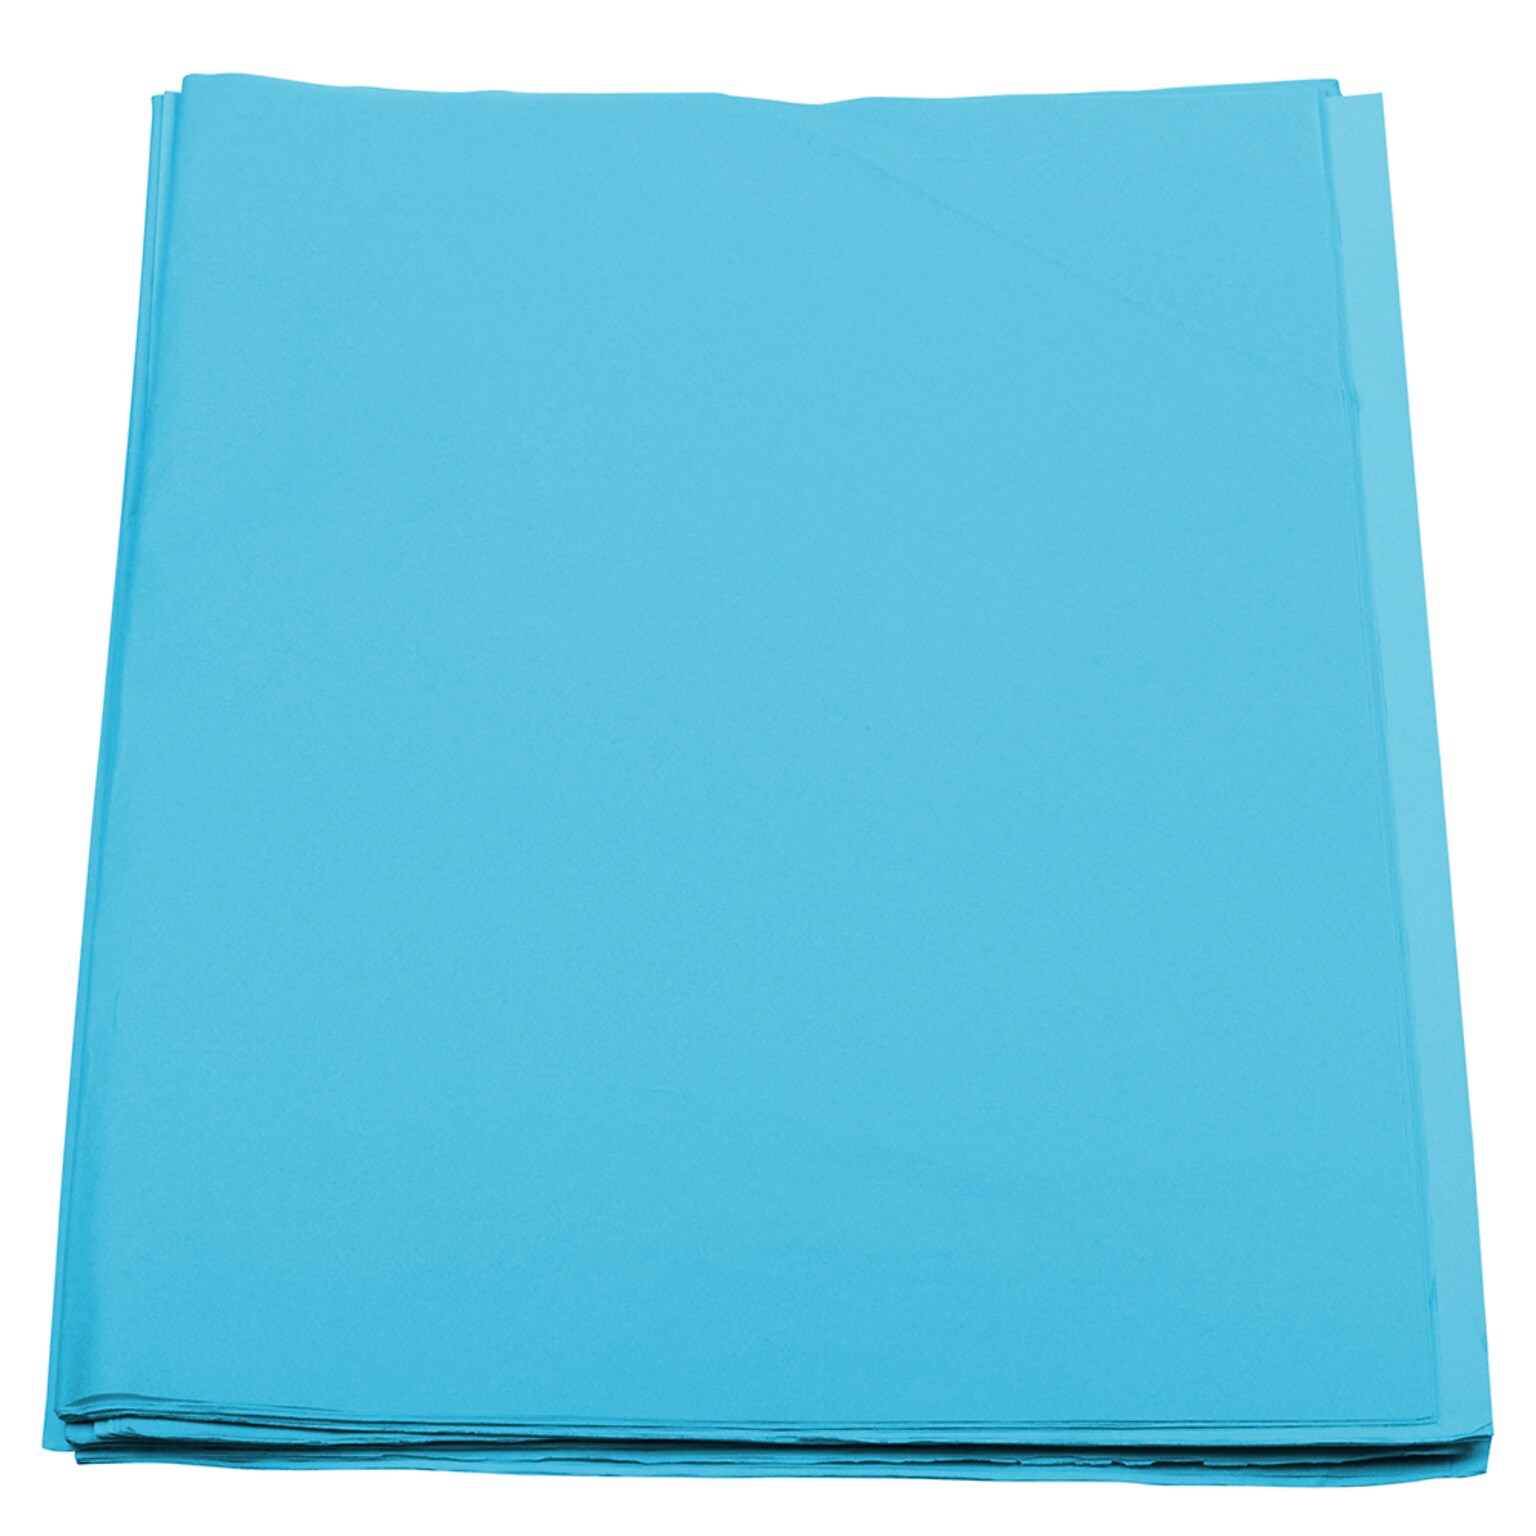 JAM PAPER Tissue Paper, Aqua Blue,480 Sheets/Ream